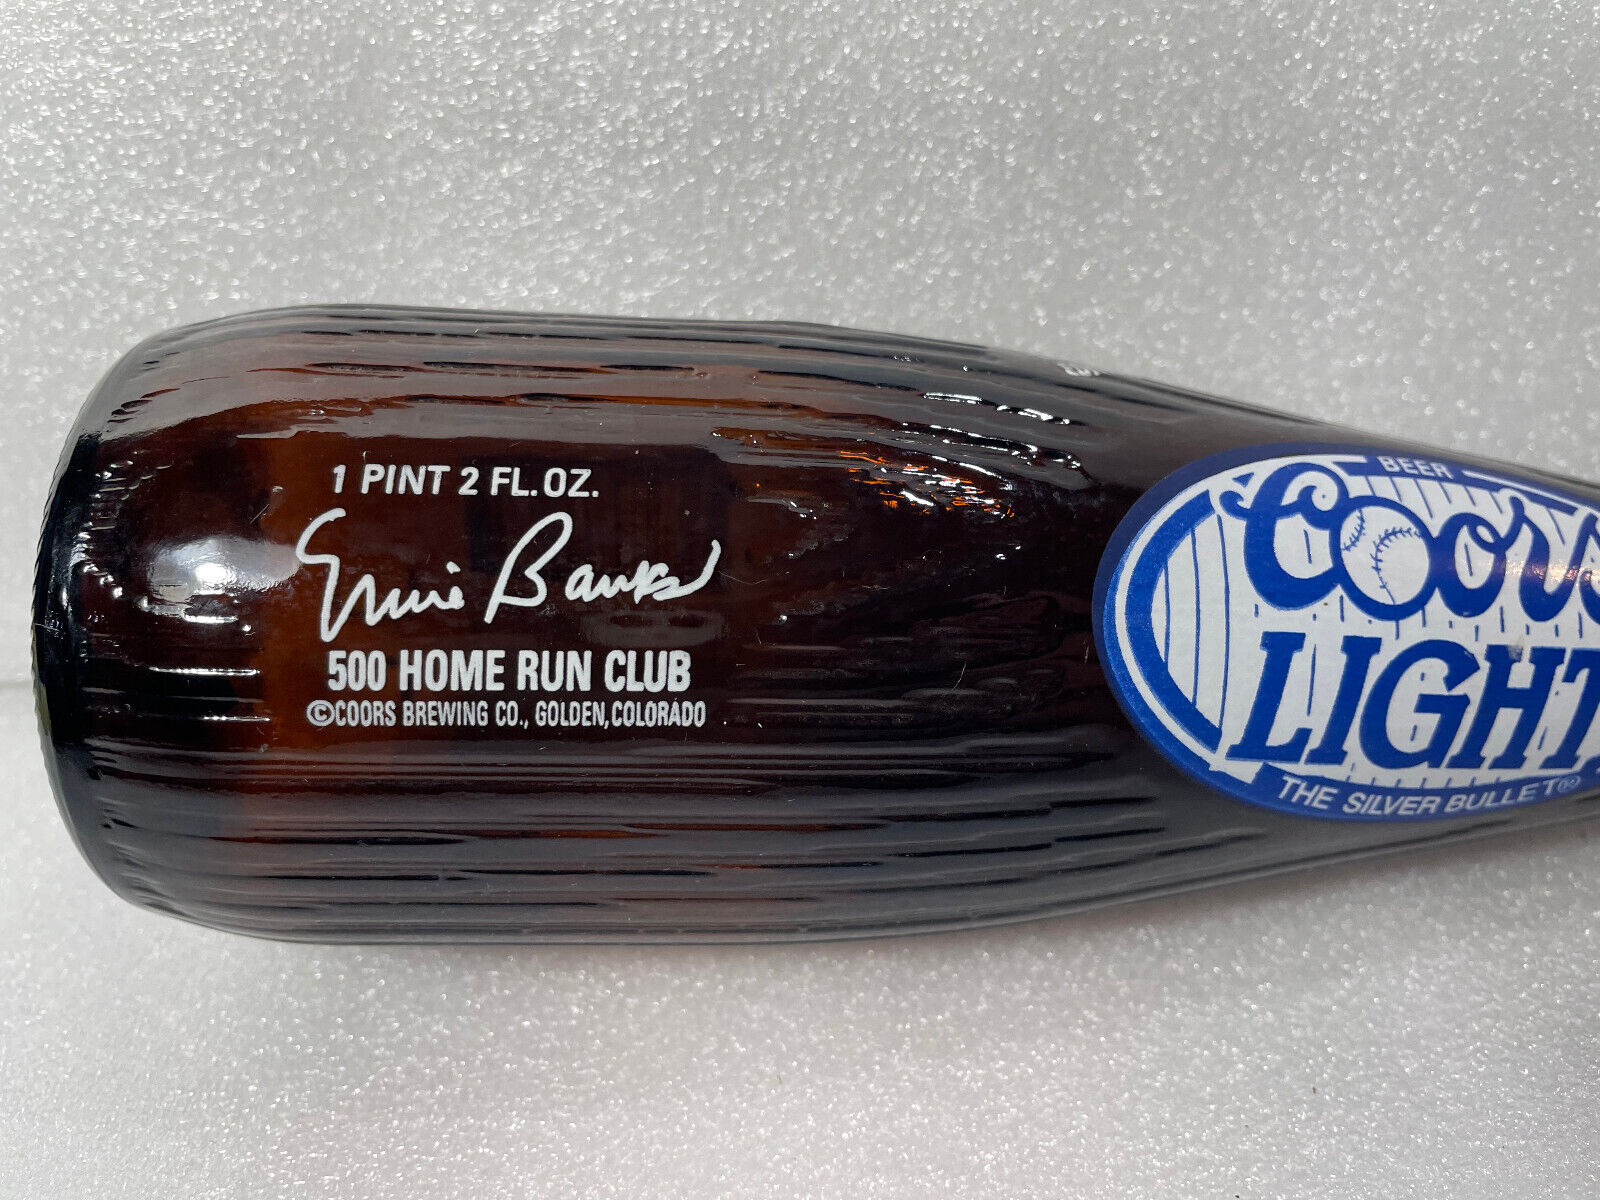 Ernie Banks Coors Light 500 Home Run Club Bat Bottle